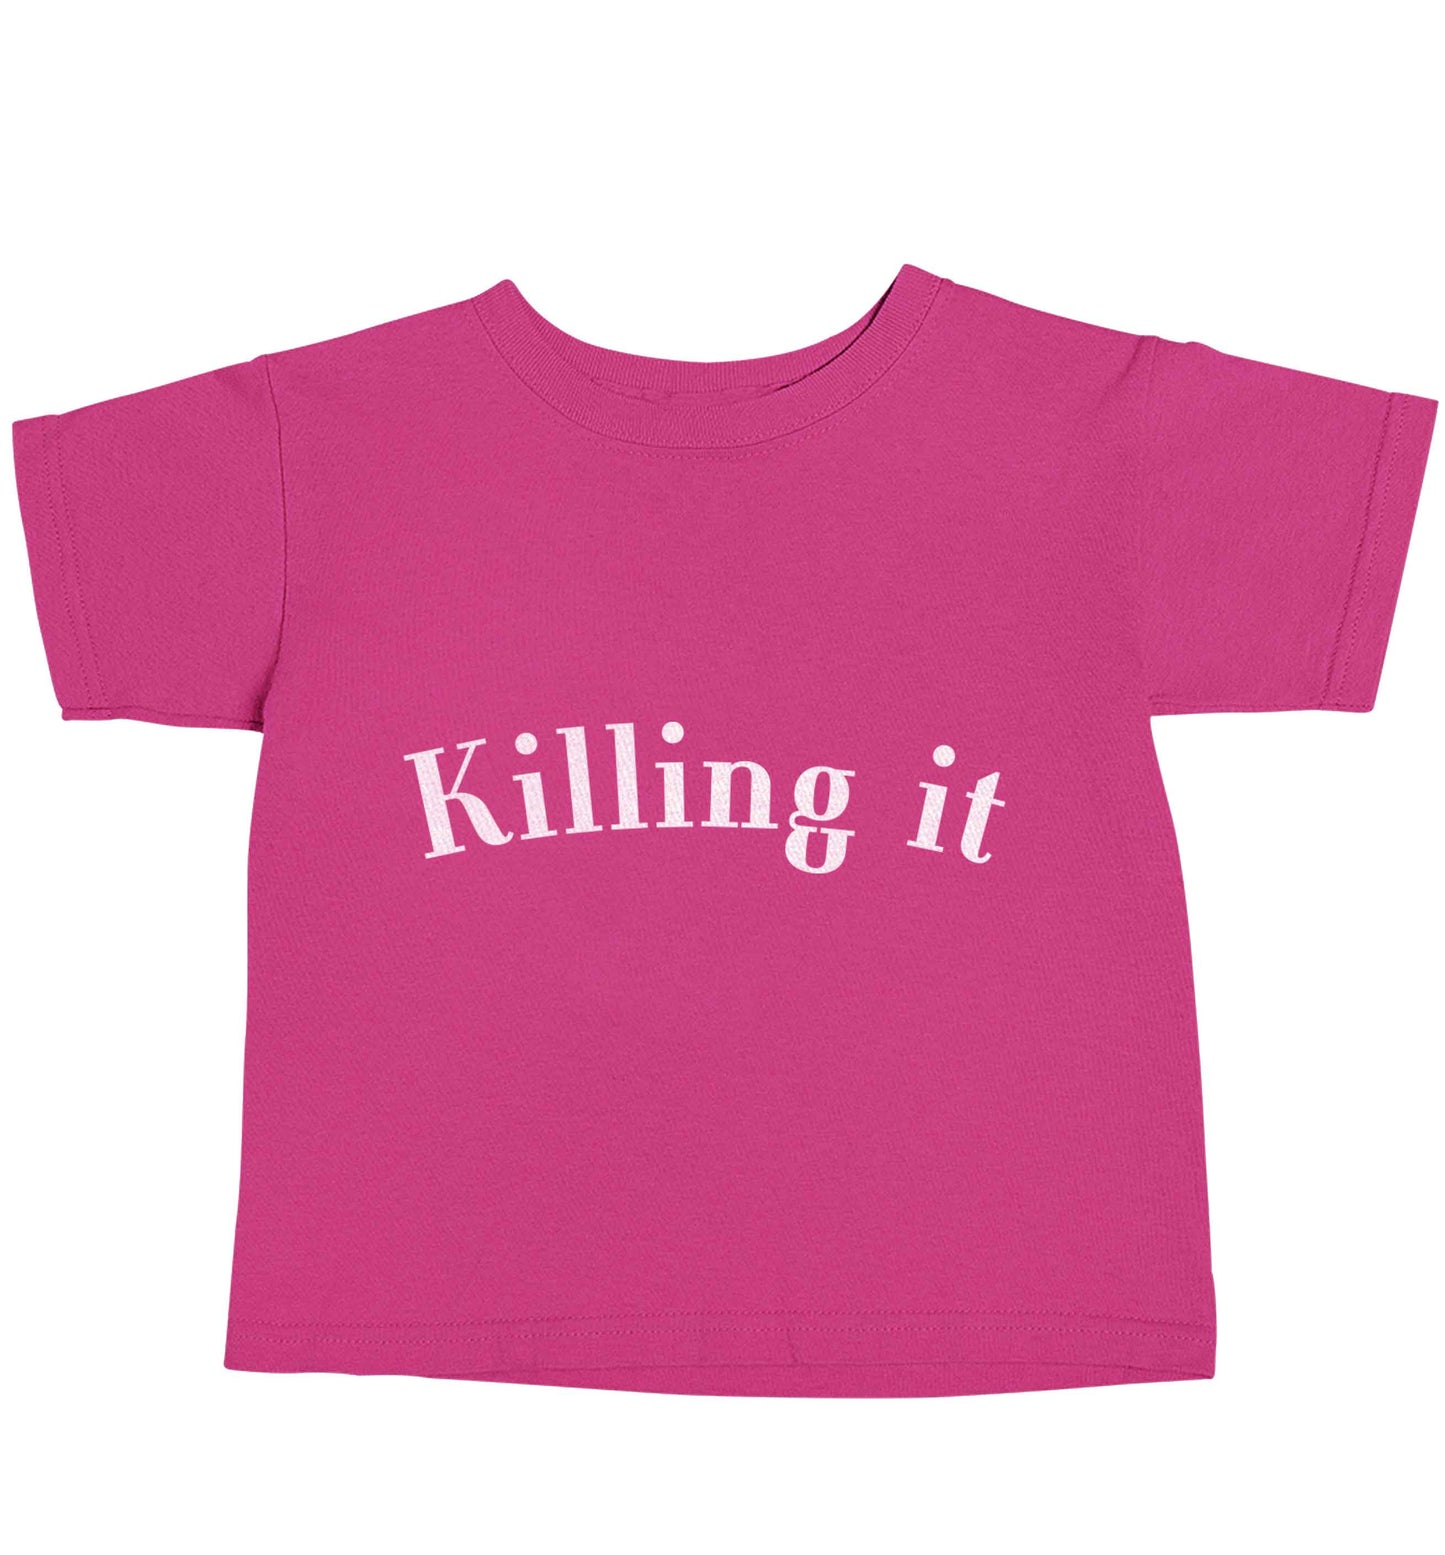 Killing it pink baby toddler Tshirt 2 Years